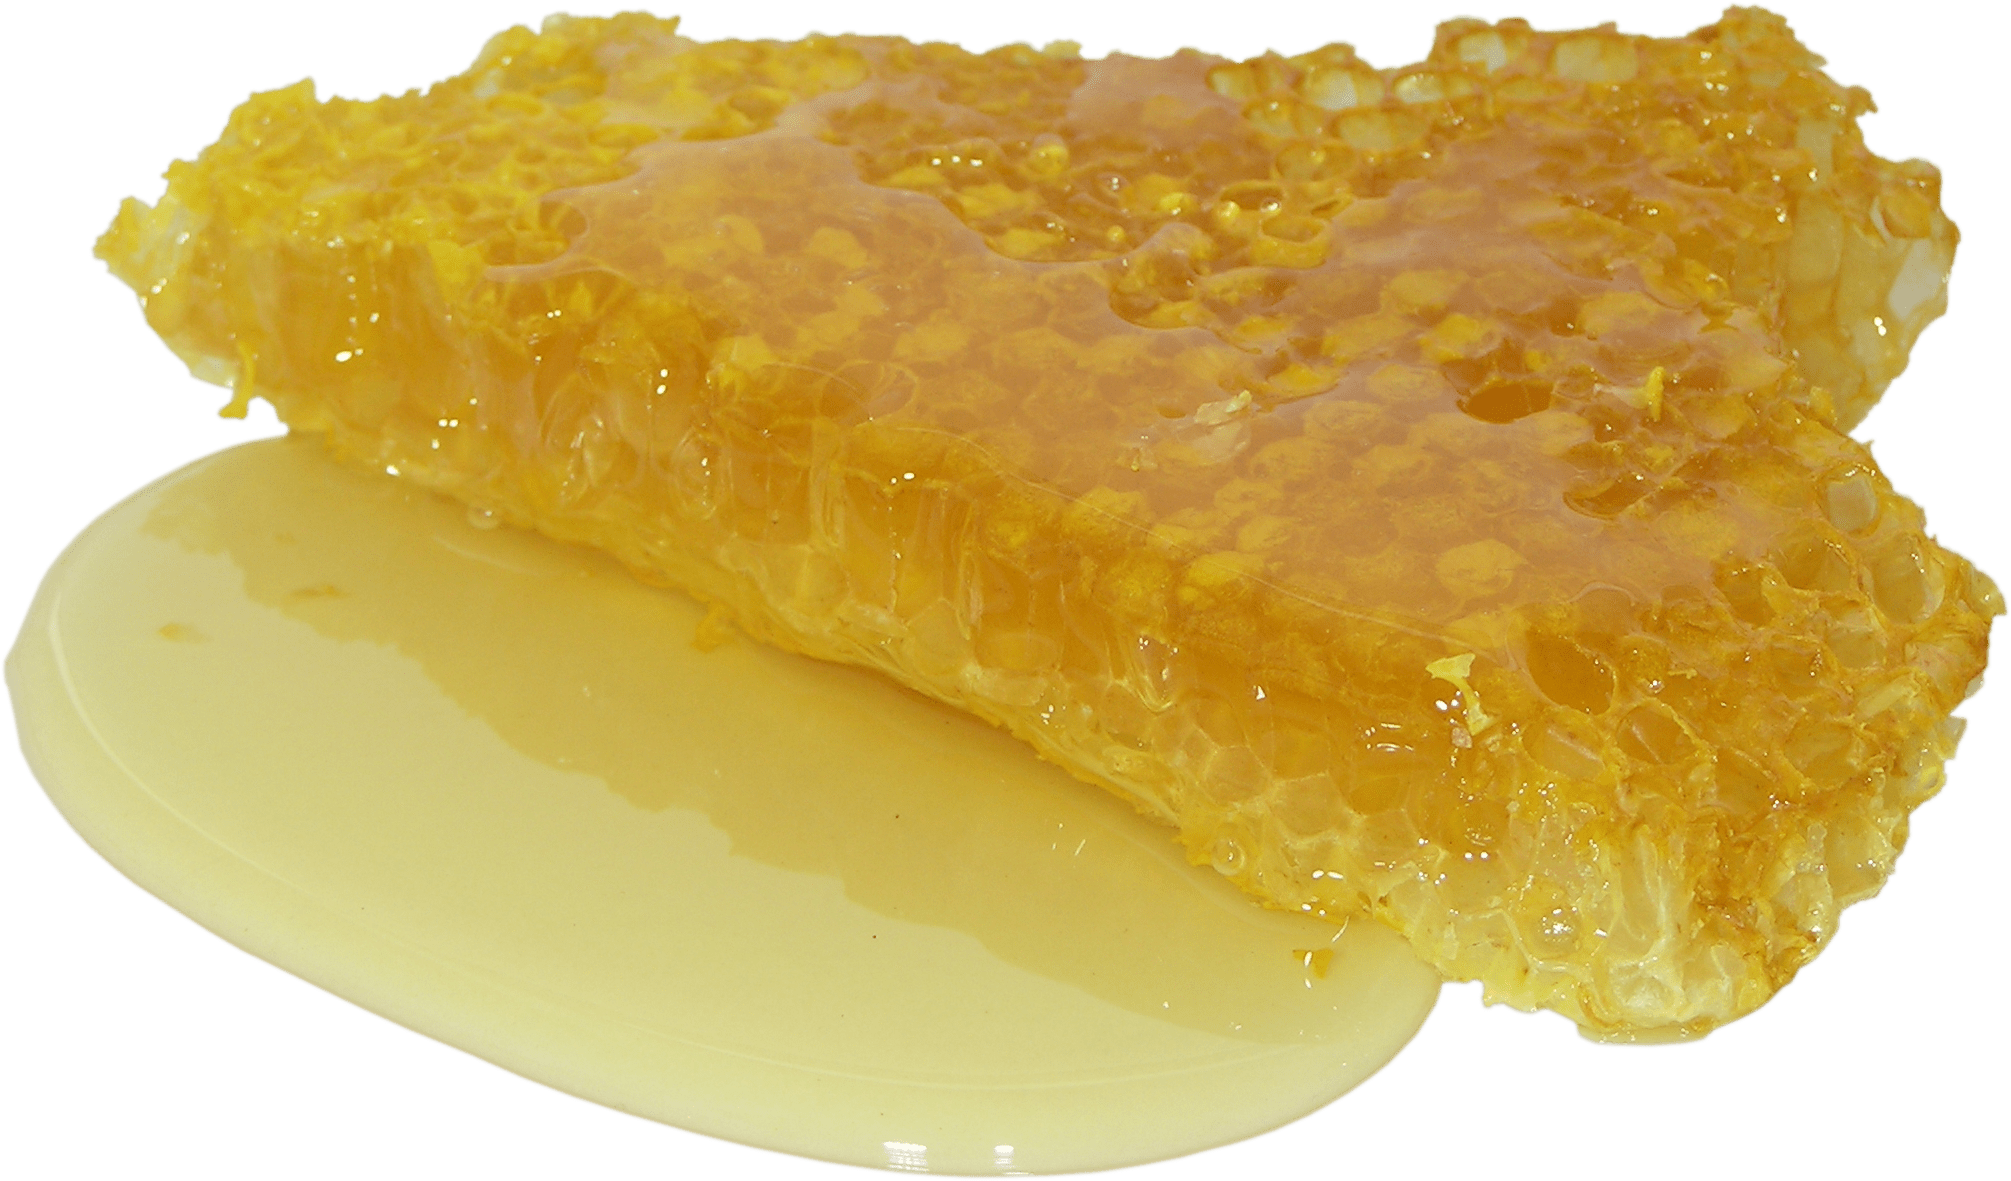 Panal con miel como fondo natural muy agradable